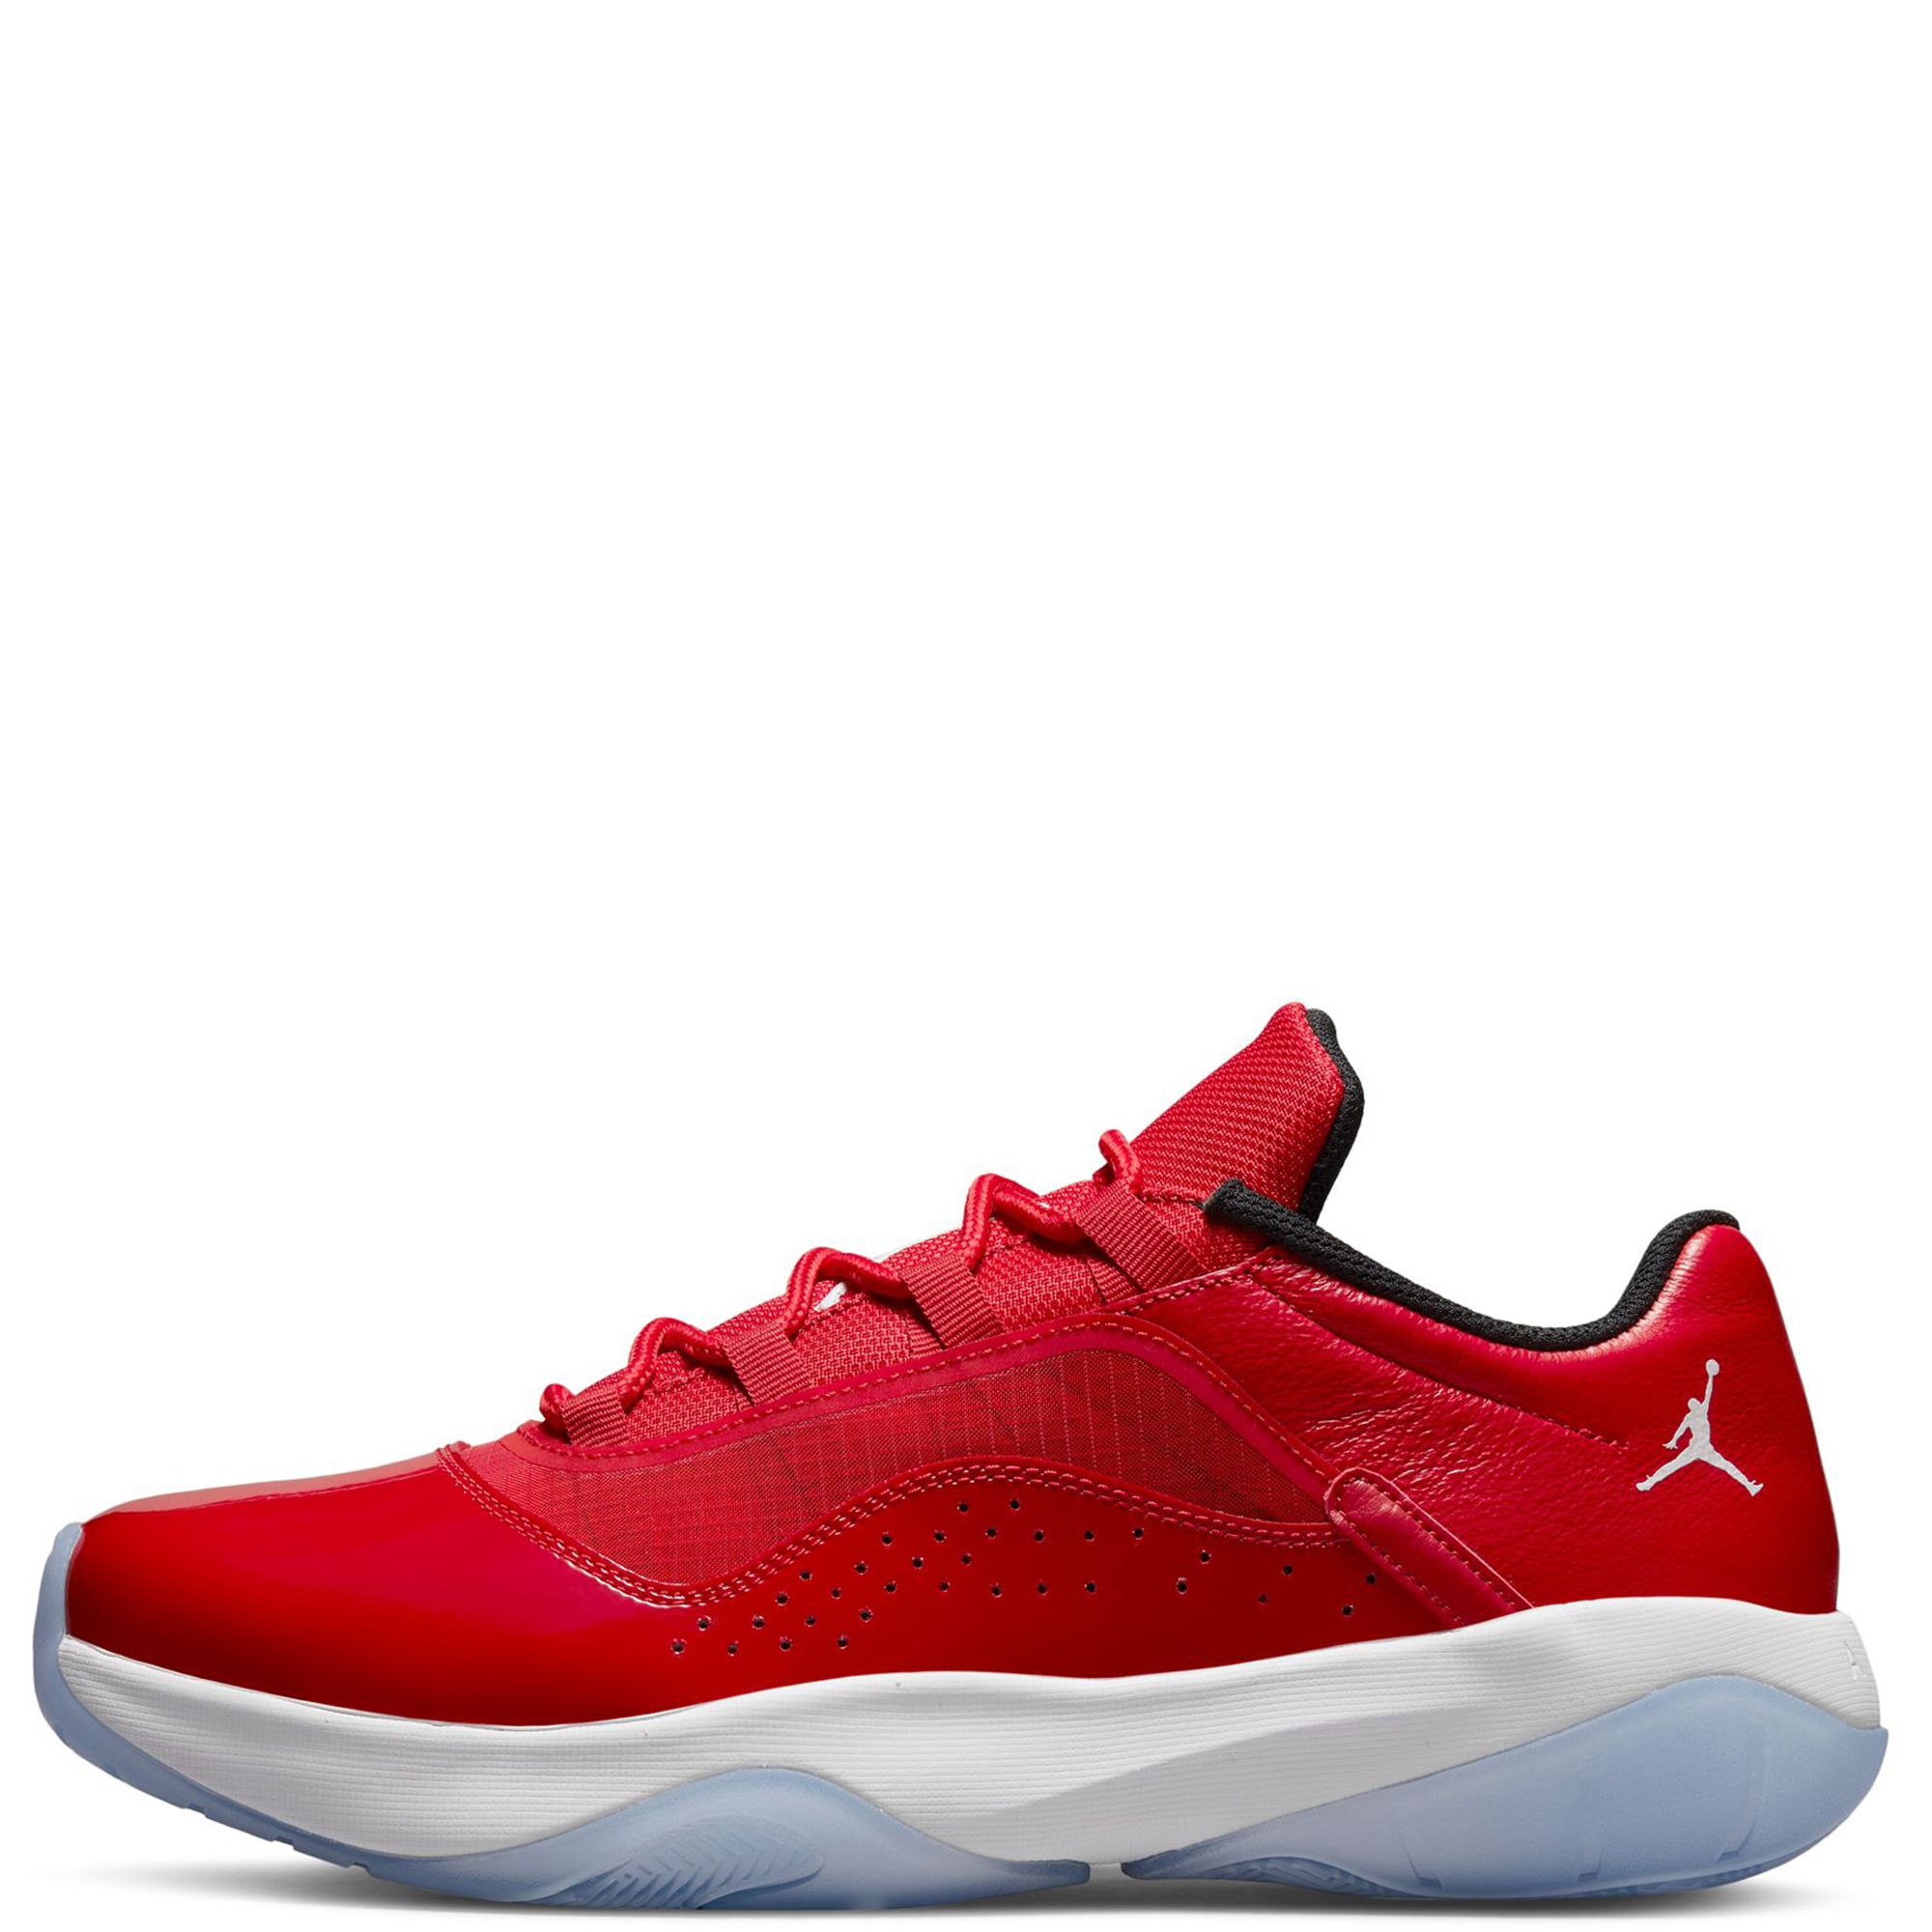 Nike Air Jordan 11 CMFT Low Shoes Black Red White "Bred"